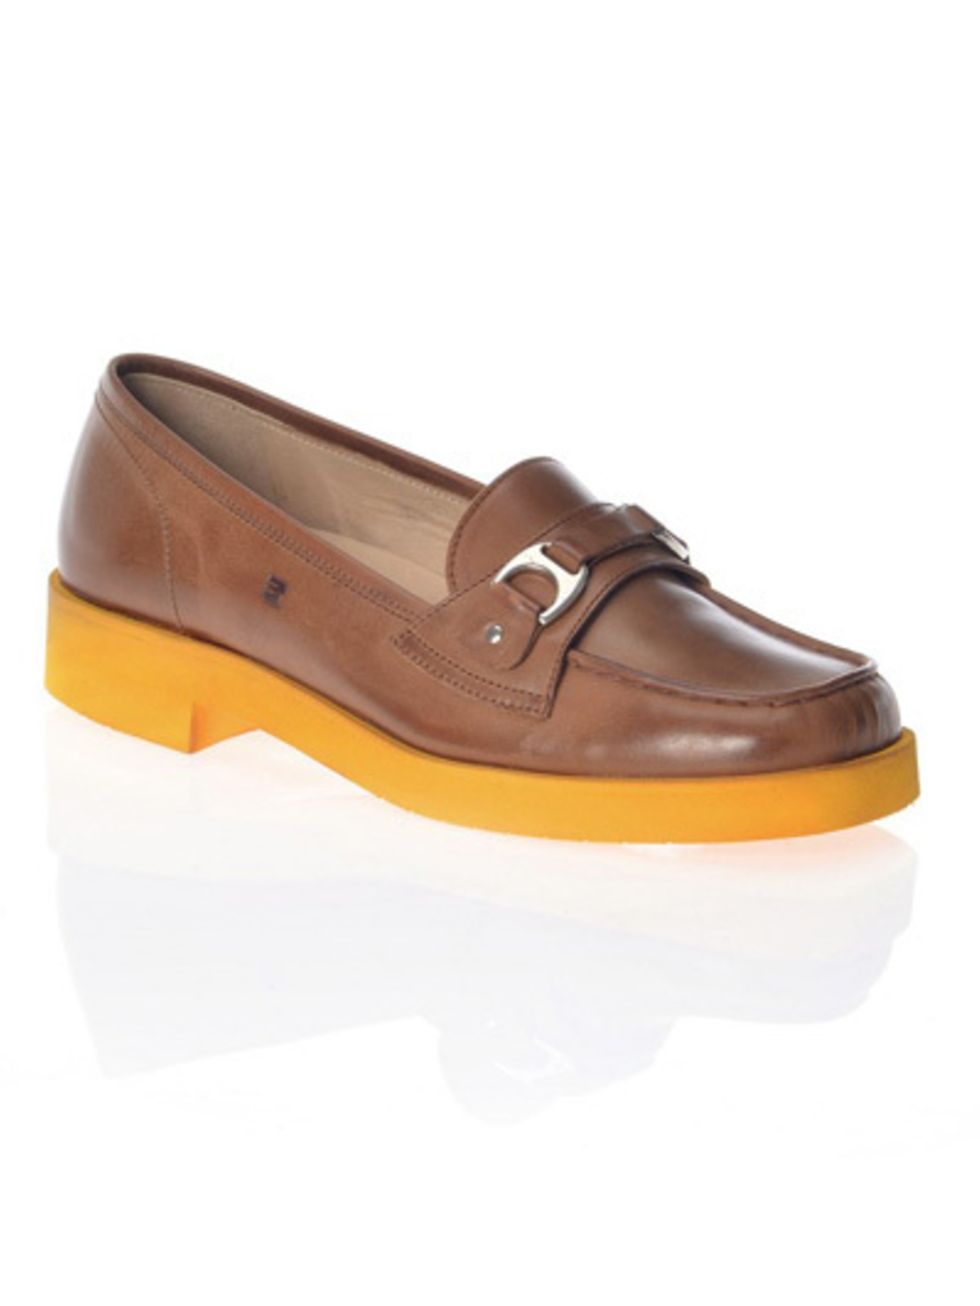 Footwear, Product, Brown, Shoe, Orange, Tan, Black, Maroon, Dress shoe, Beige, 